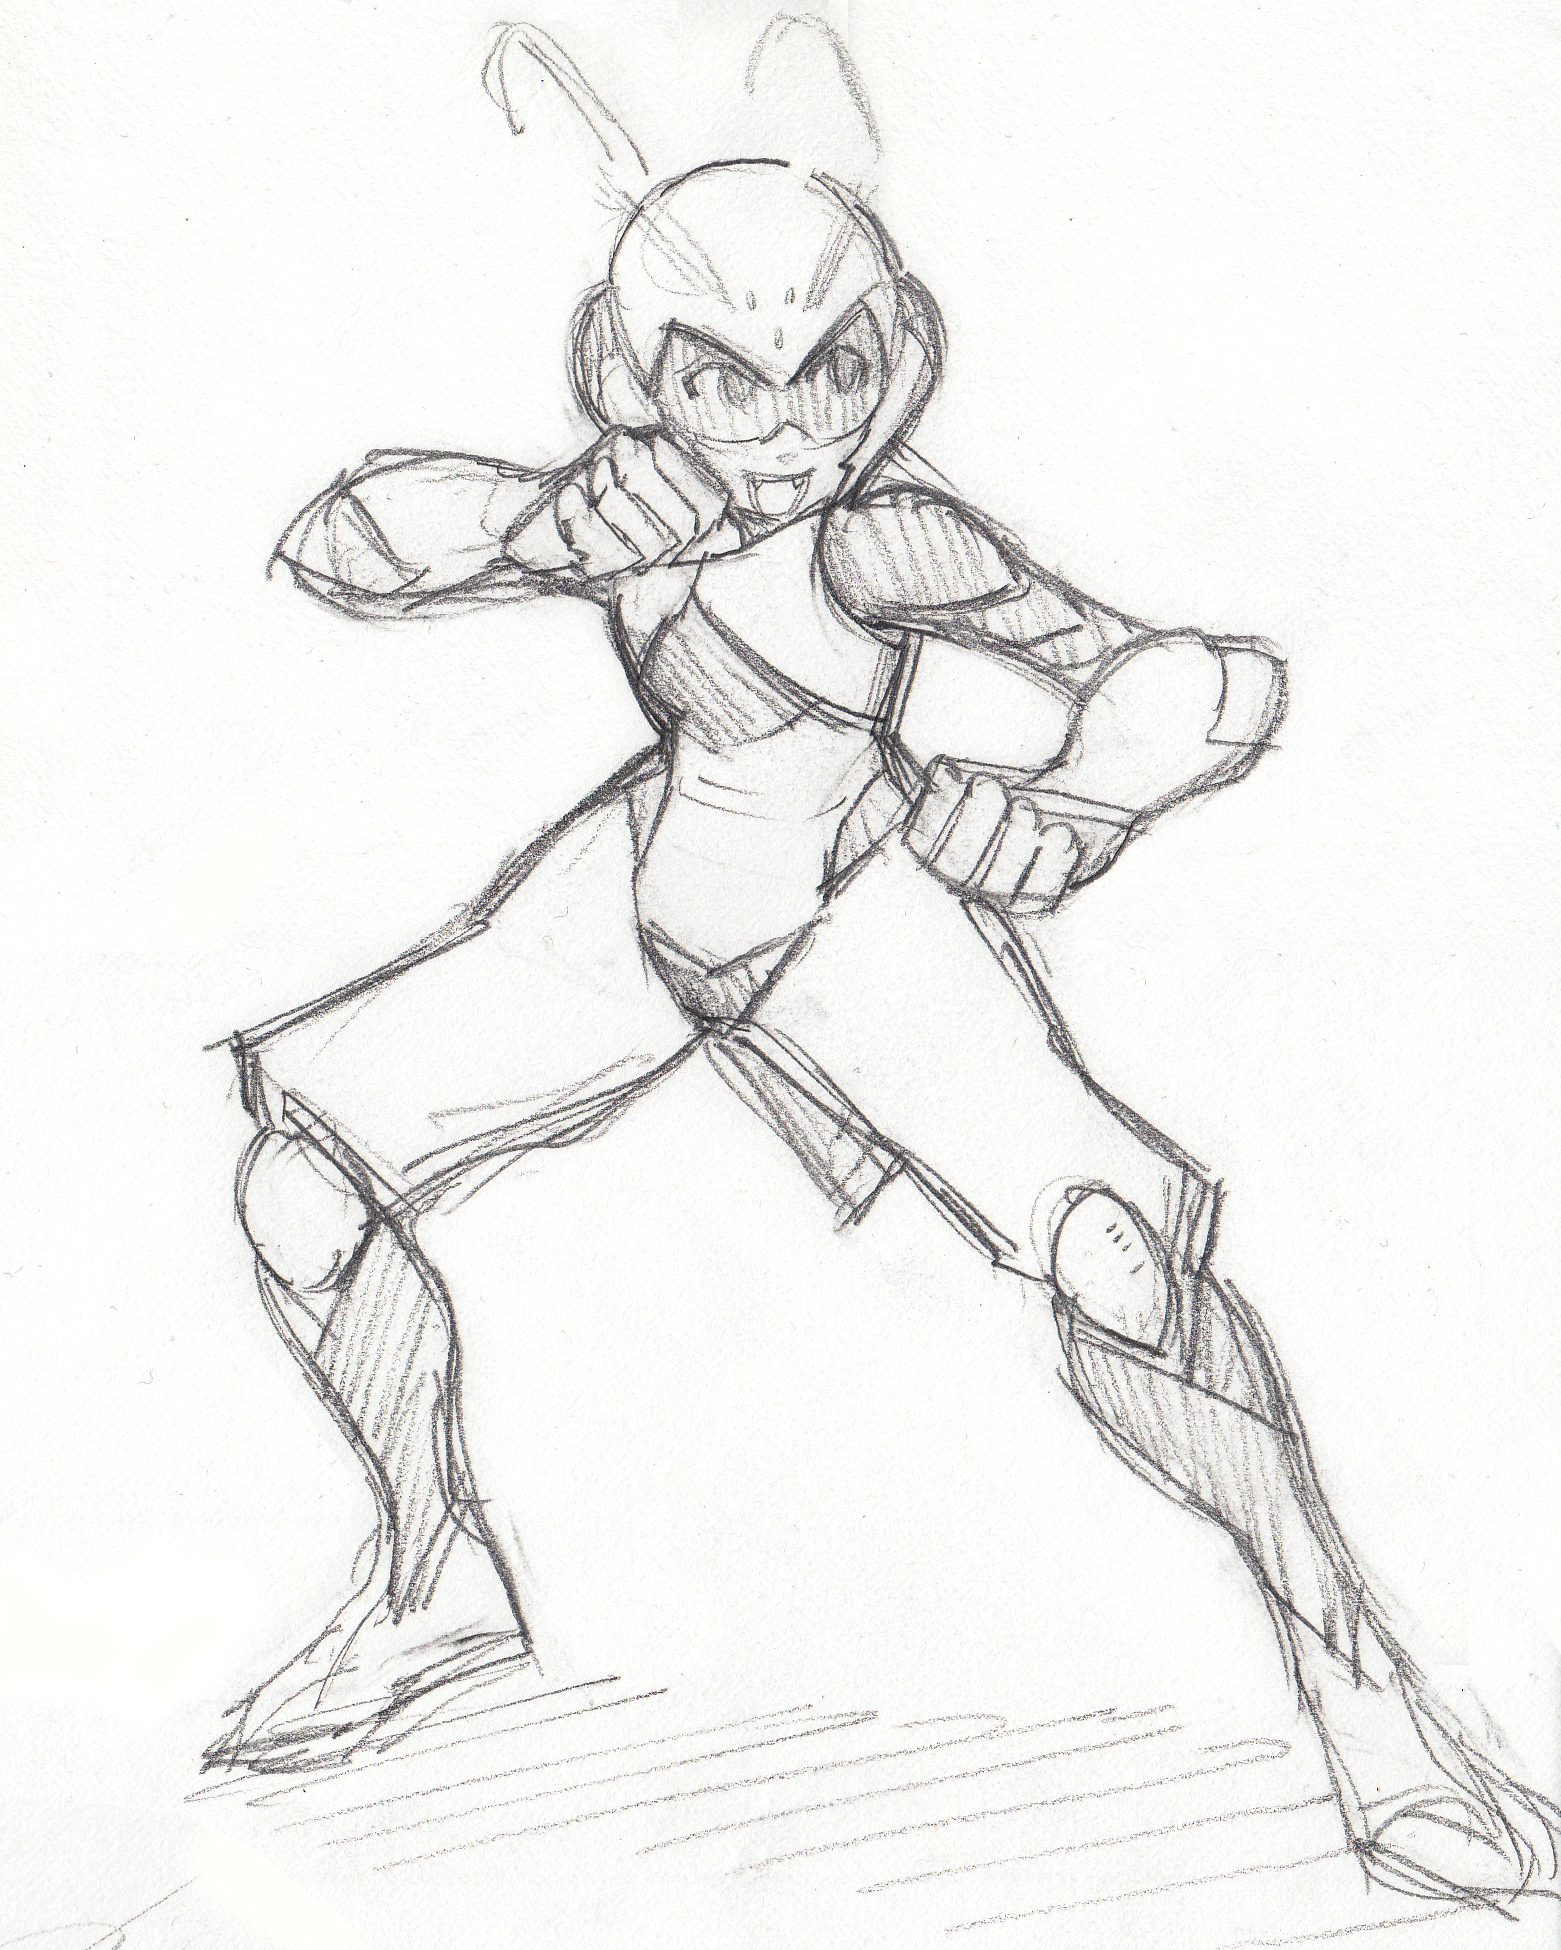 Vespa battle stance sketch